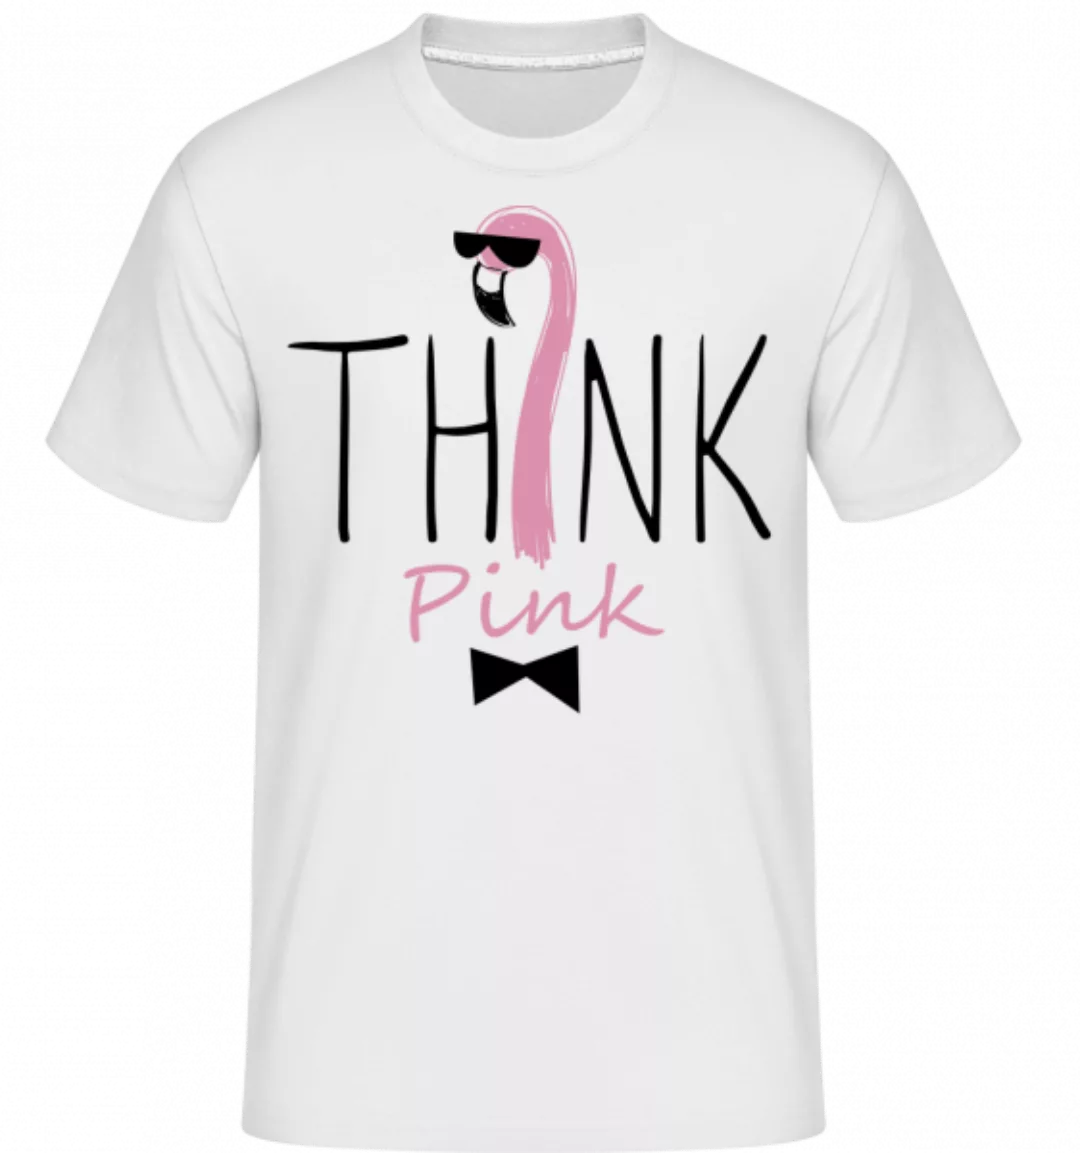 Think Pink · Shirtinator Männer T-Shirt günstig online kaufen